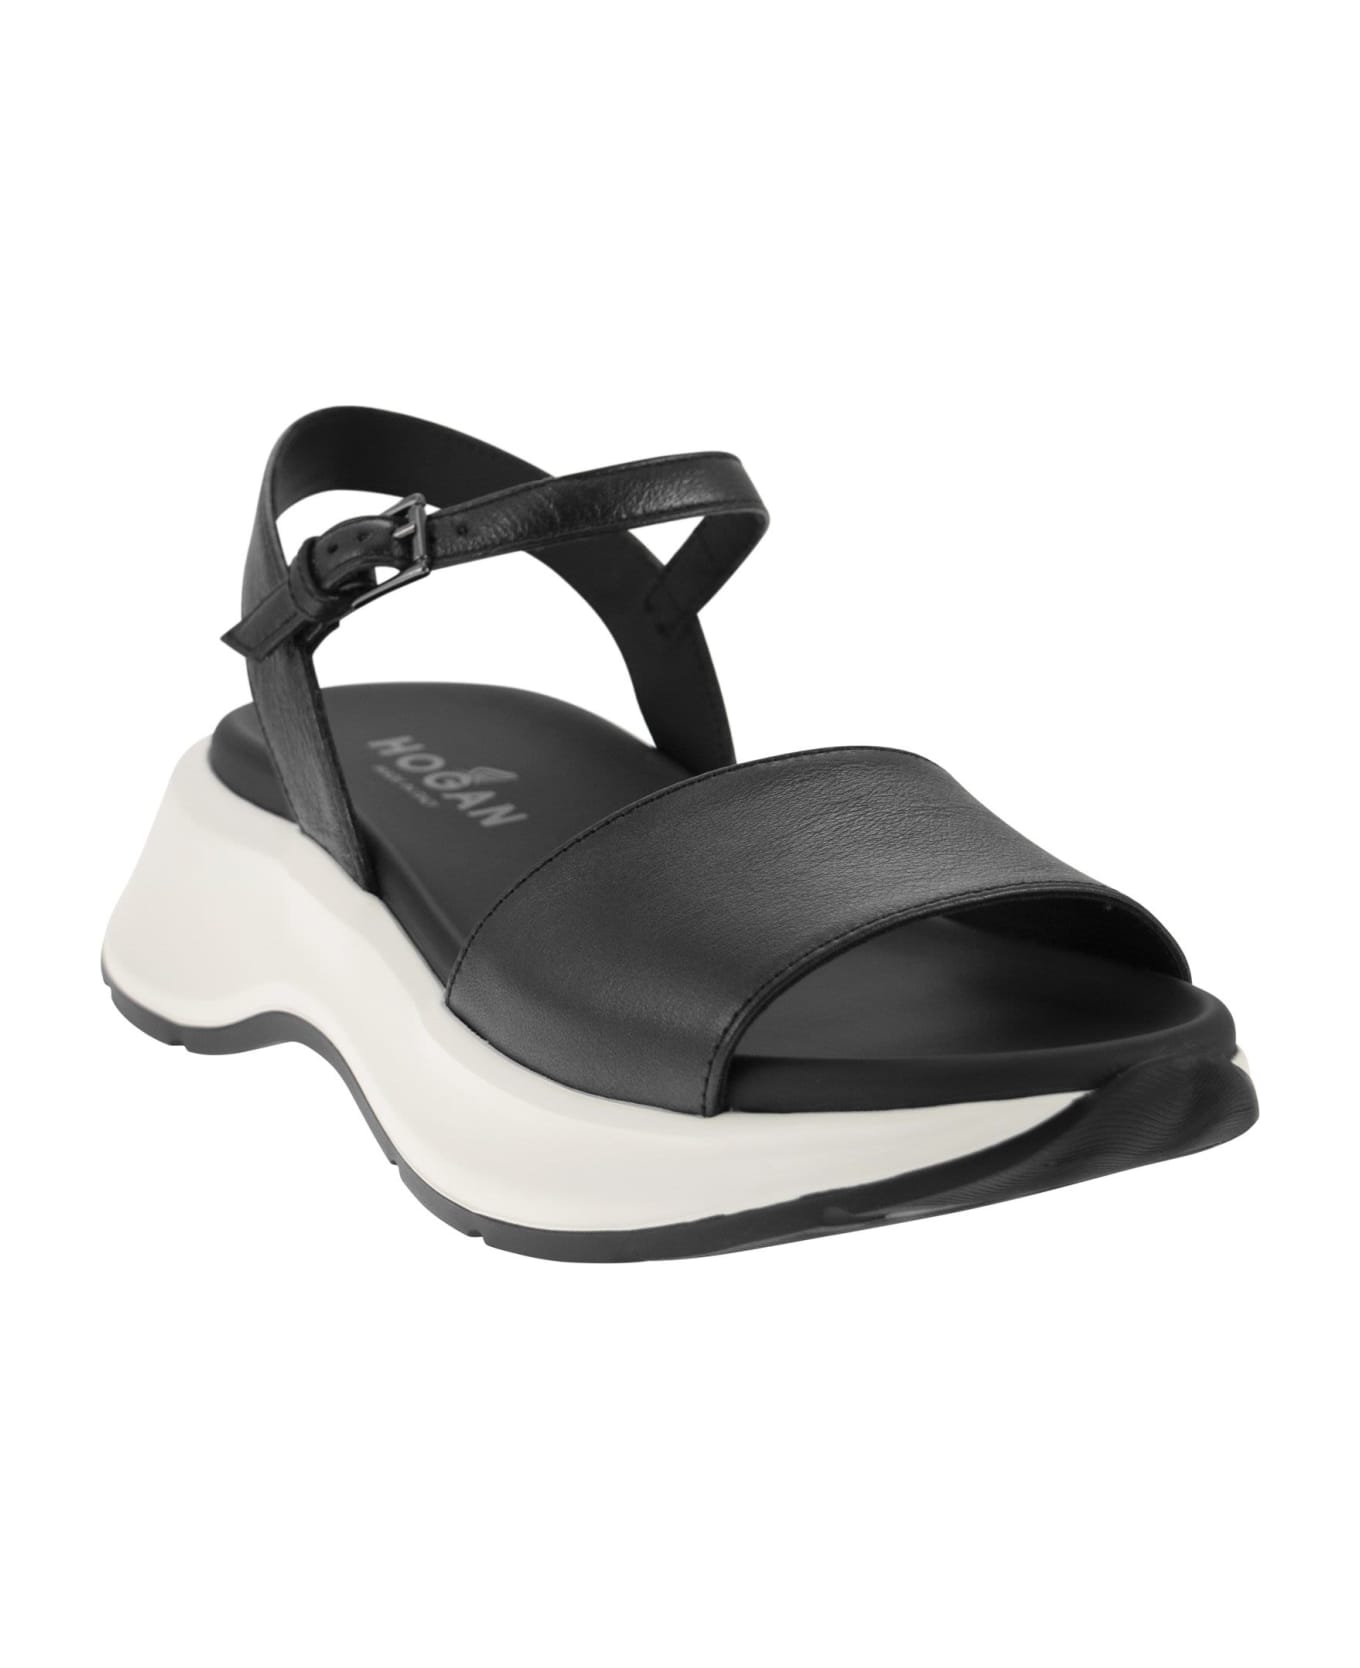 Hogan H598 Sandals - Black